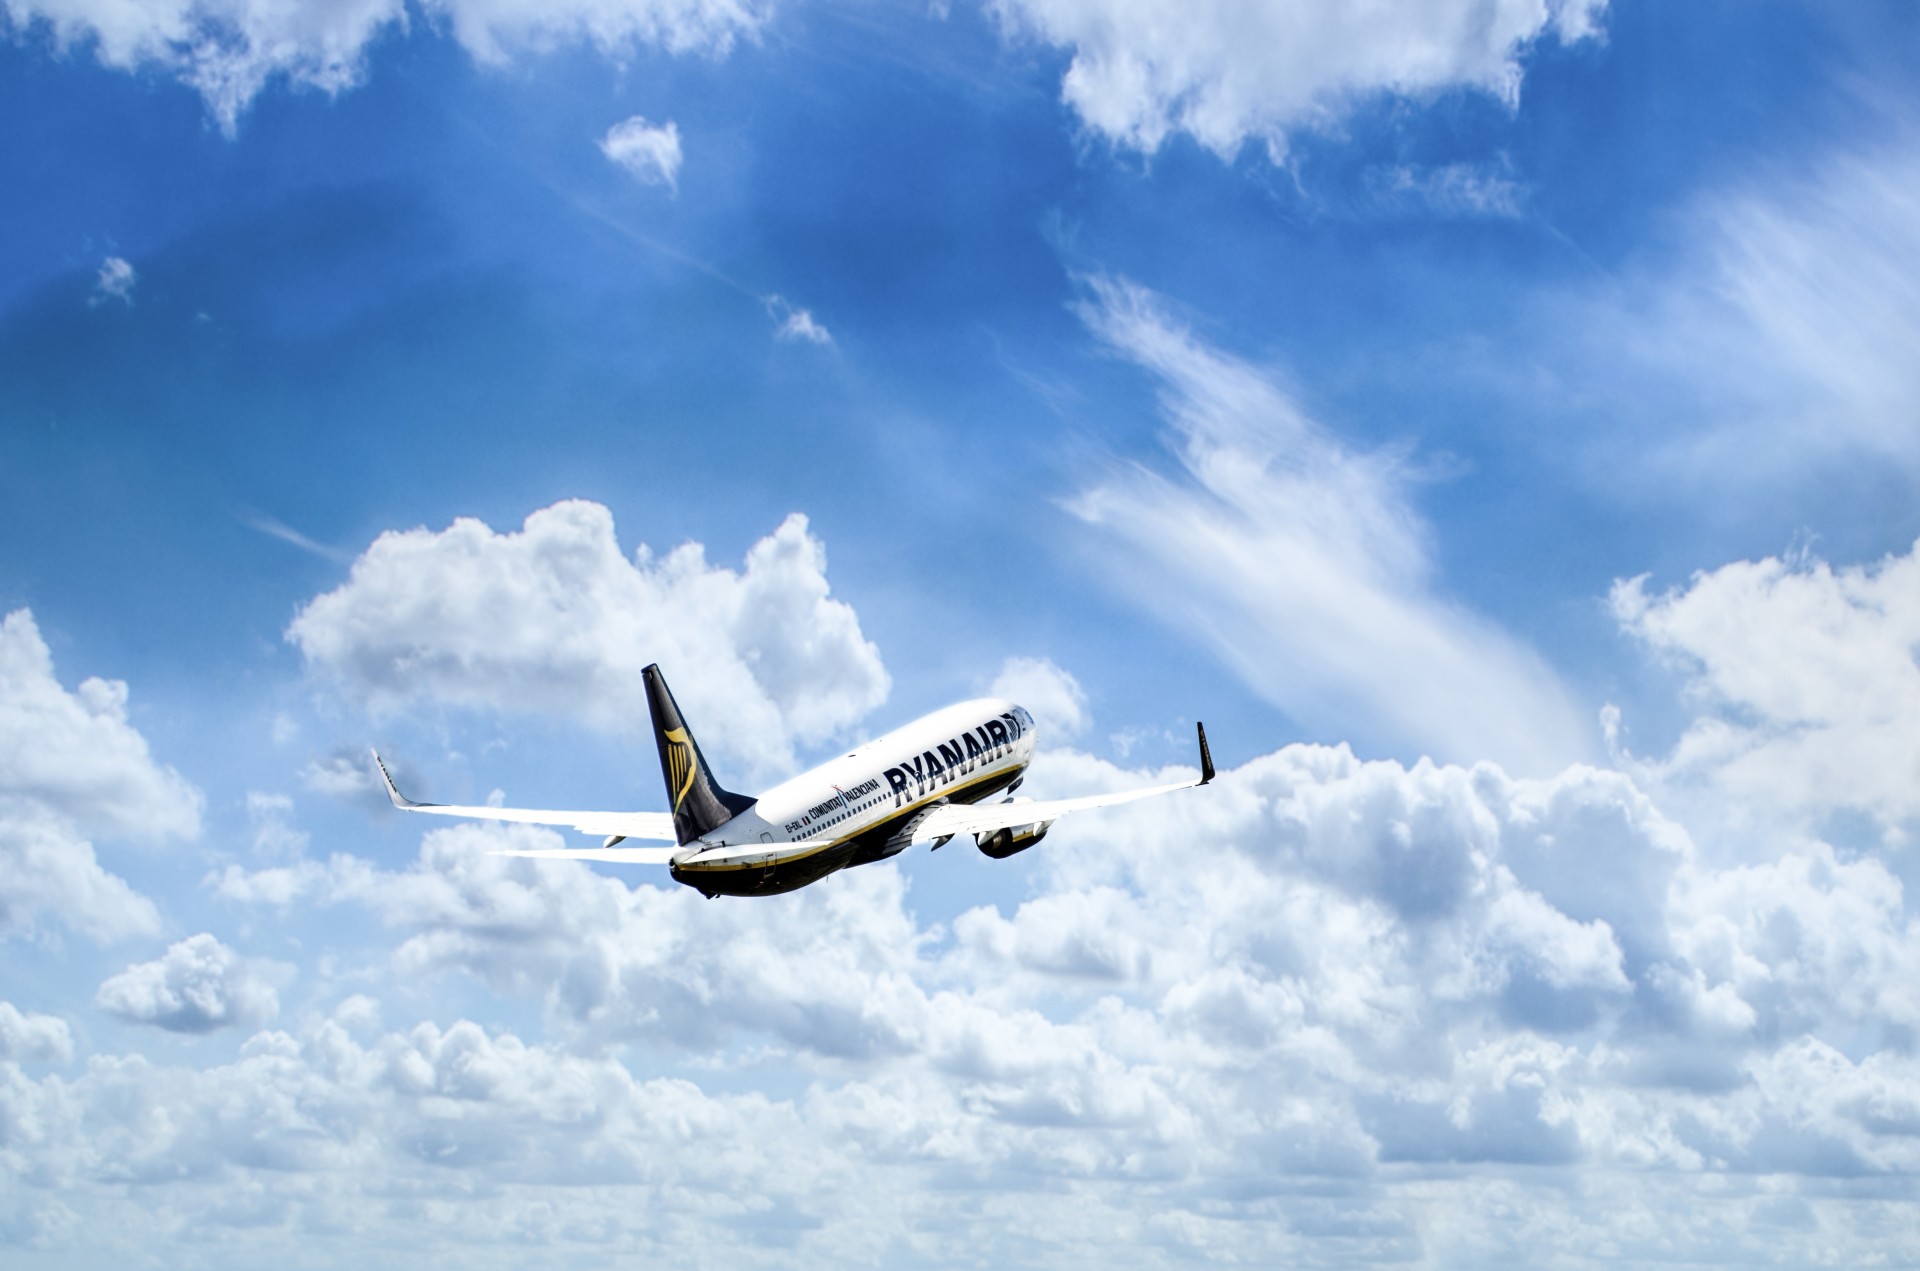 Jet Plane In A Blue Cloudy Sky